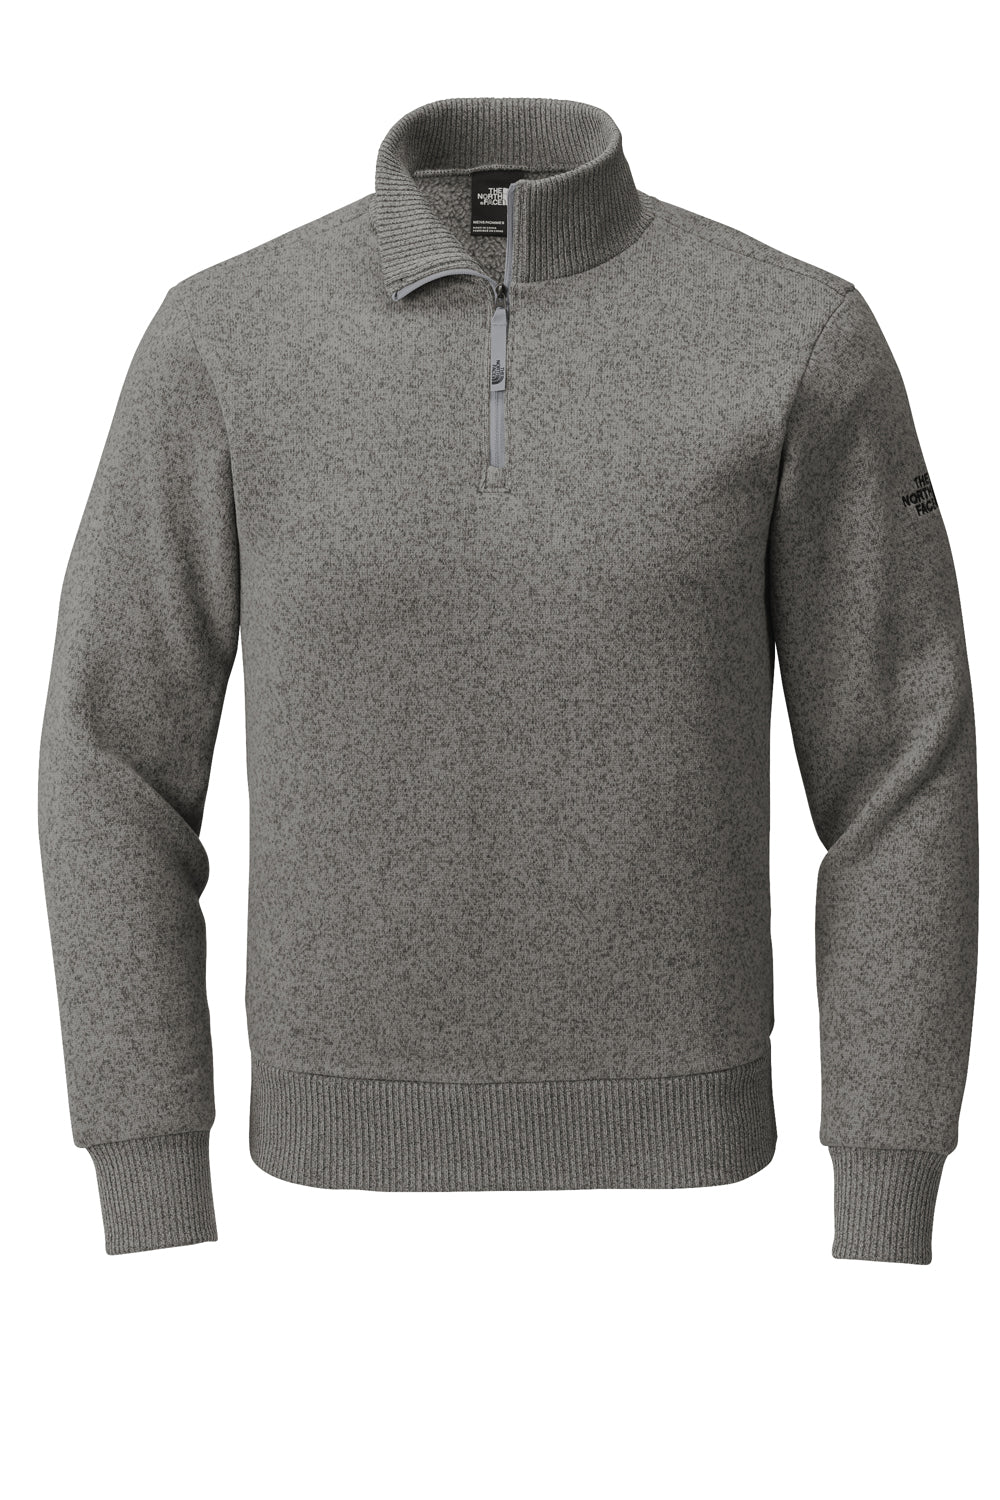 The North Face NF0A5ISE 1/4 Zip Sweater Fleece Sweatshirt Heather Medium Grey Flat Front